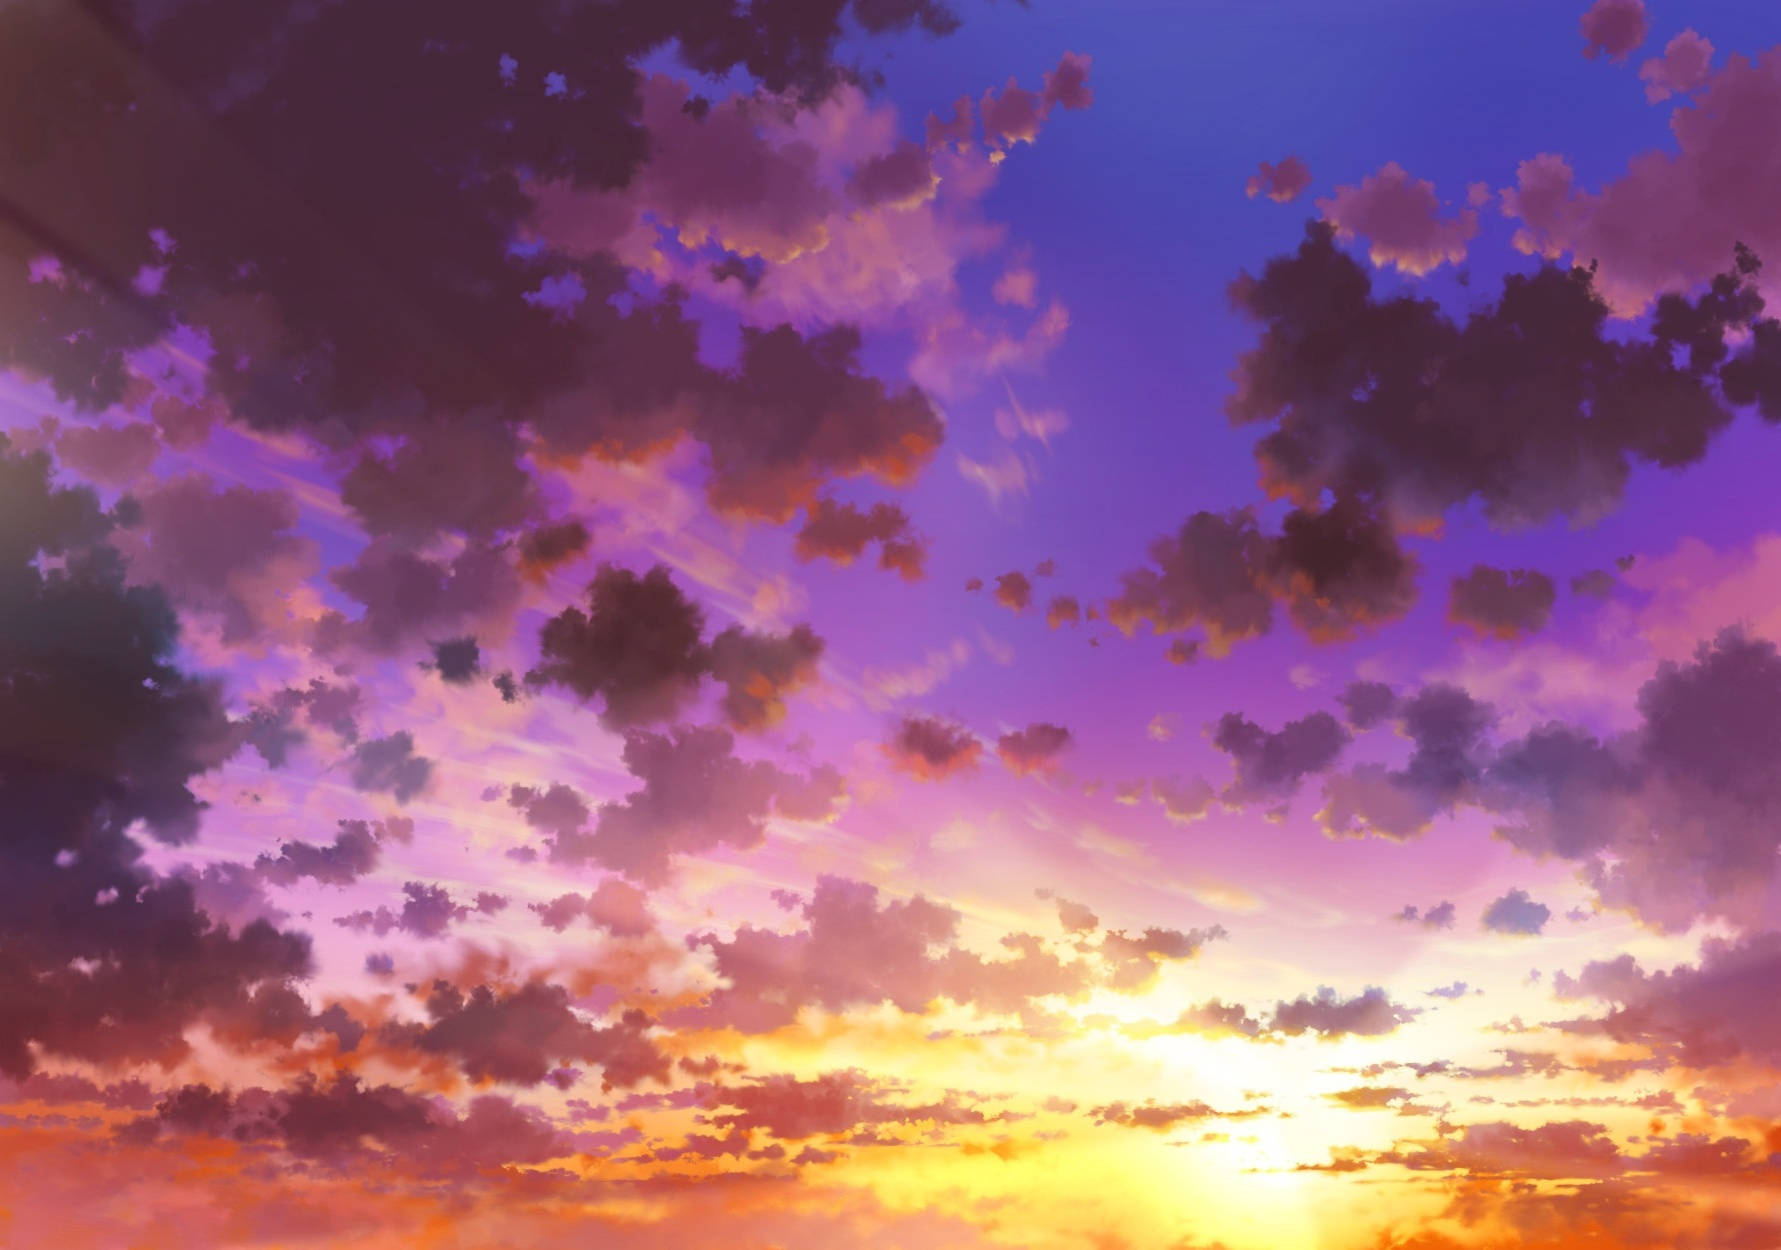 Download Sunset Sky Digital Art Wallpaper 